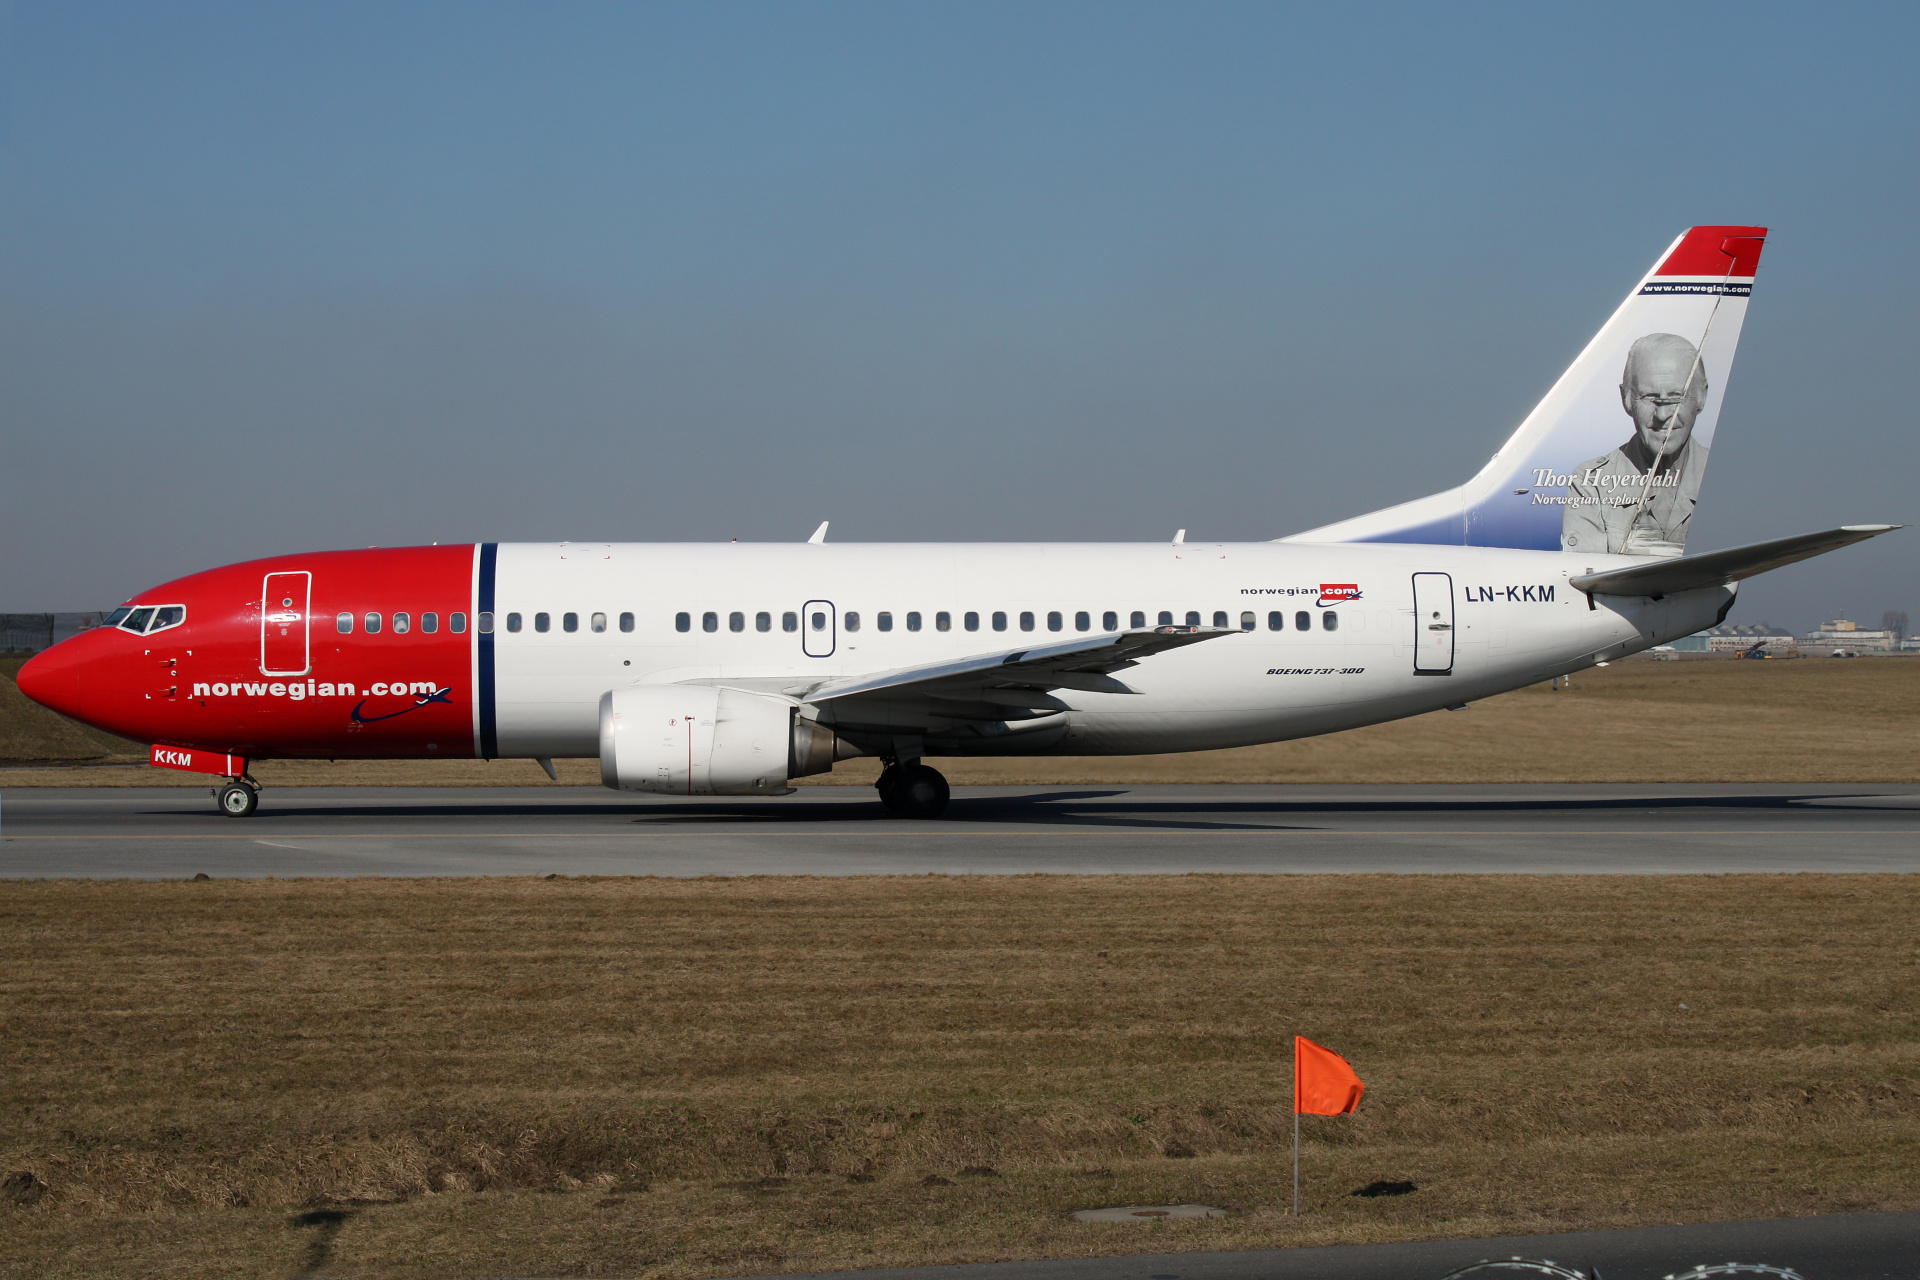 LN-KKM (Aircraft » EPWA Spotting » Boeing 737-300 » Norwegian Air Shuttle)